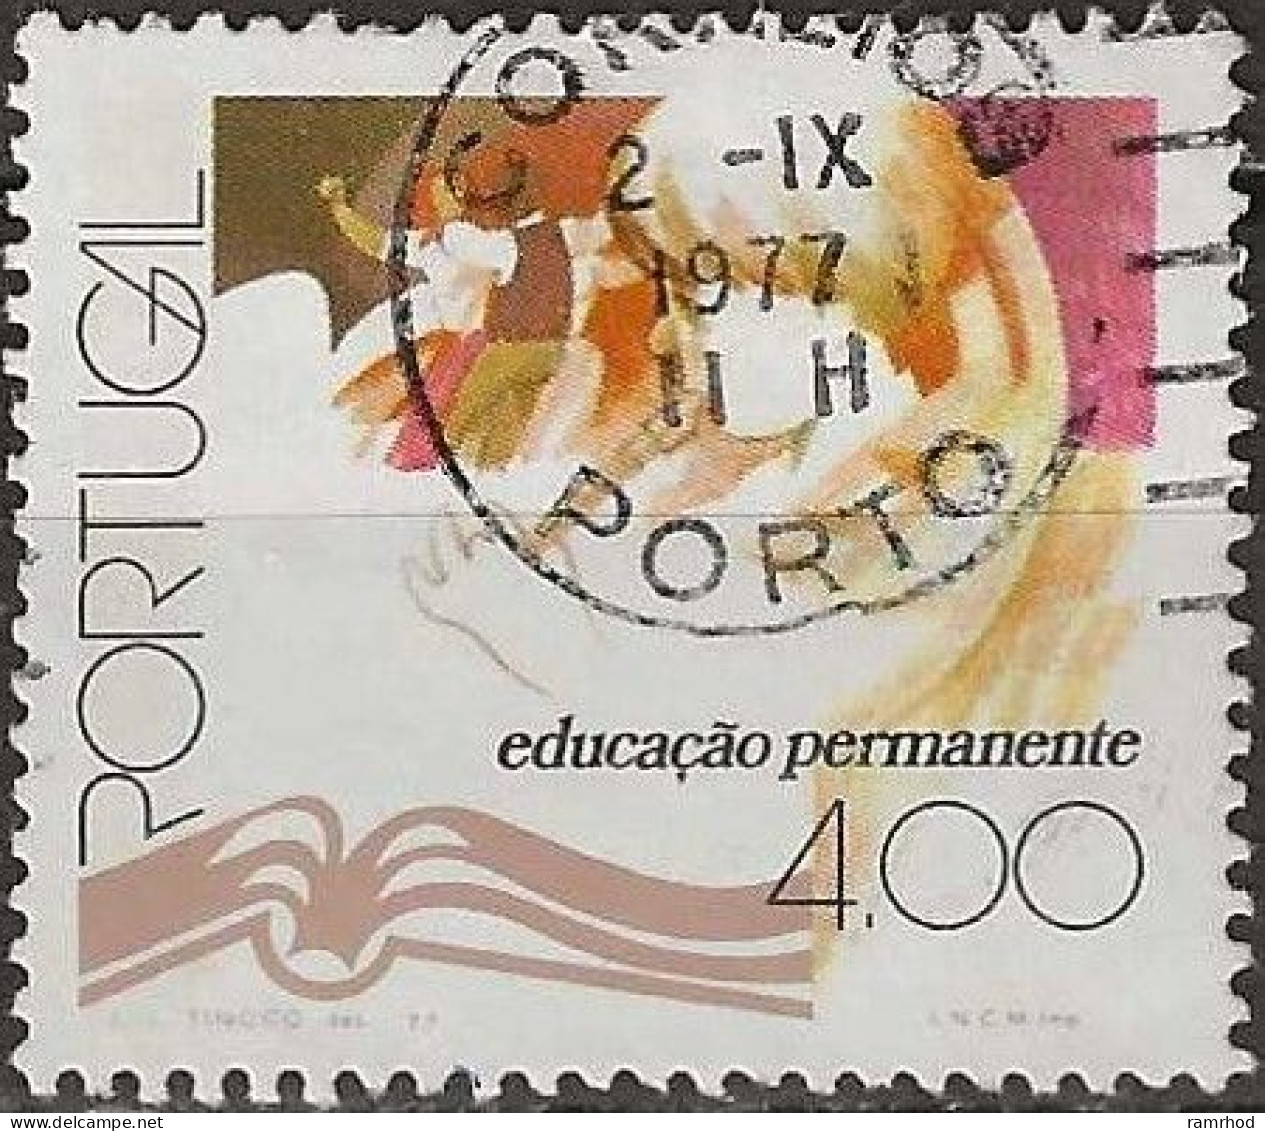 PORTUGAL 1977 Permanent Education - 4e. - Flautist And Dancers FU - Usado